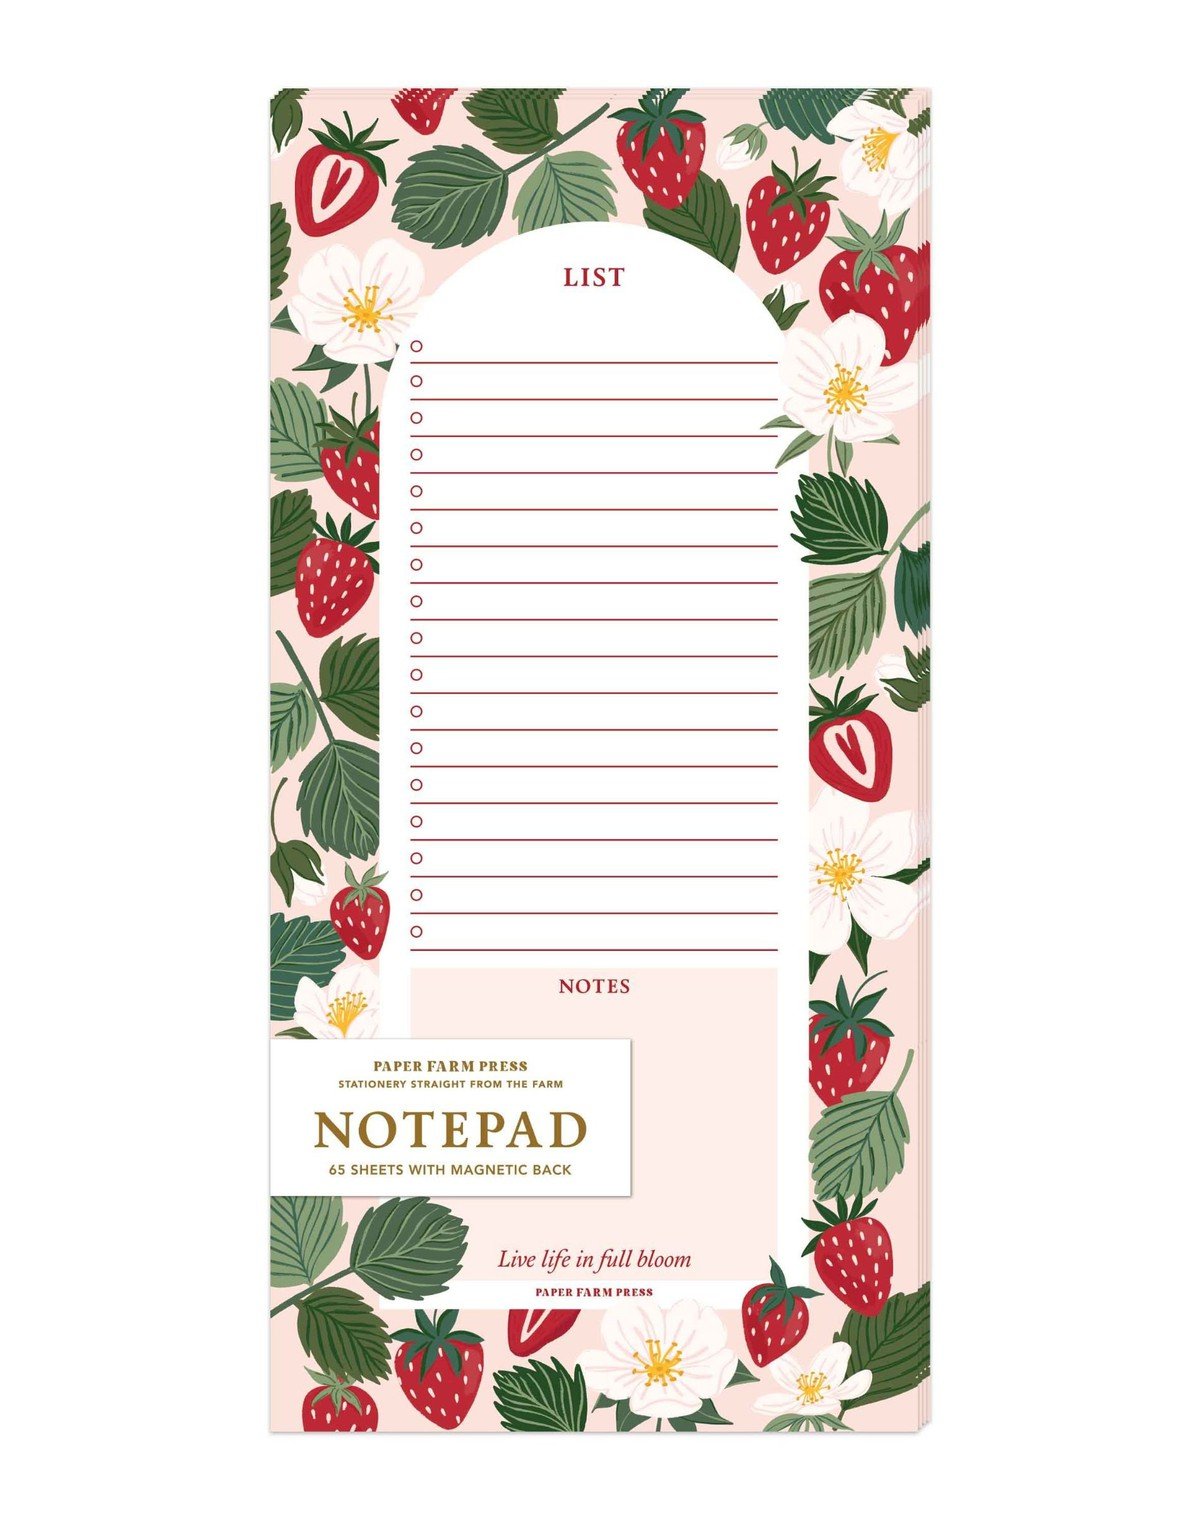 Strawberry Patch Market List Notepad item